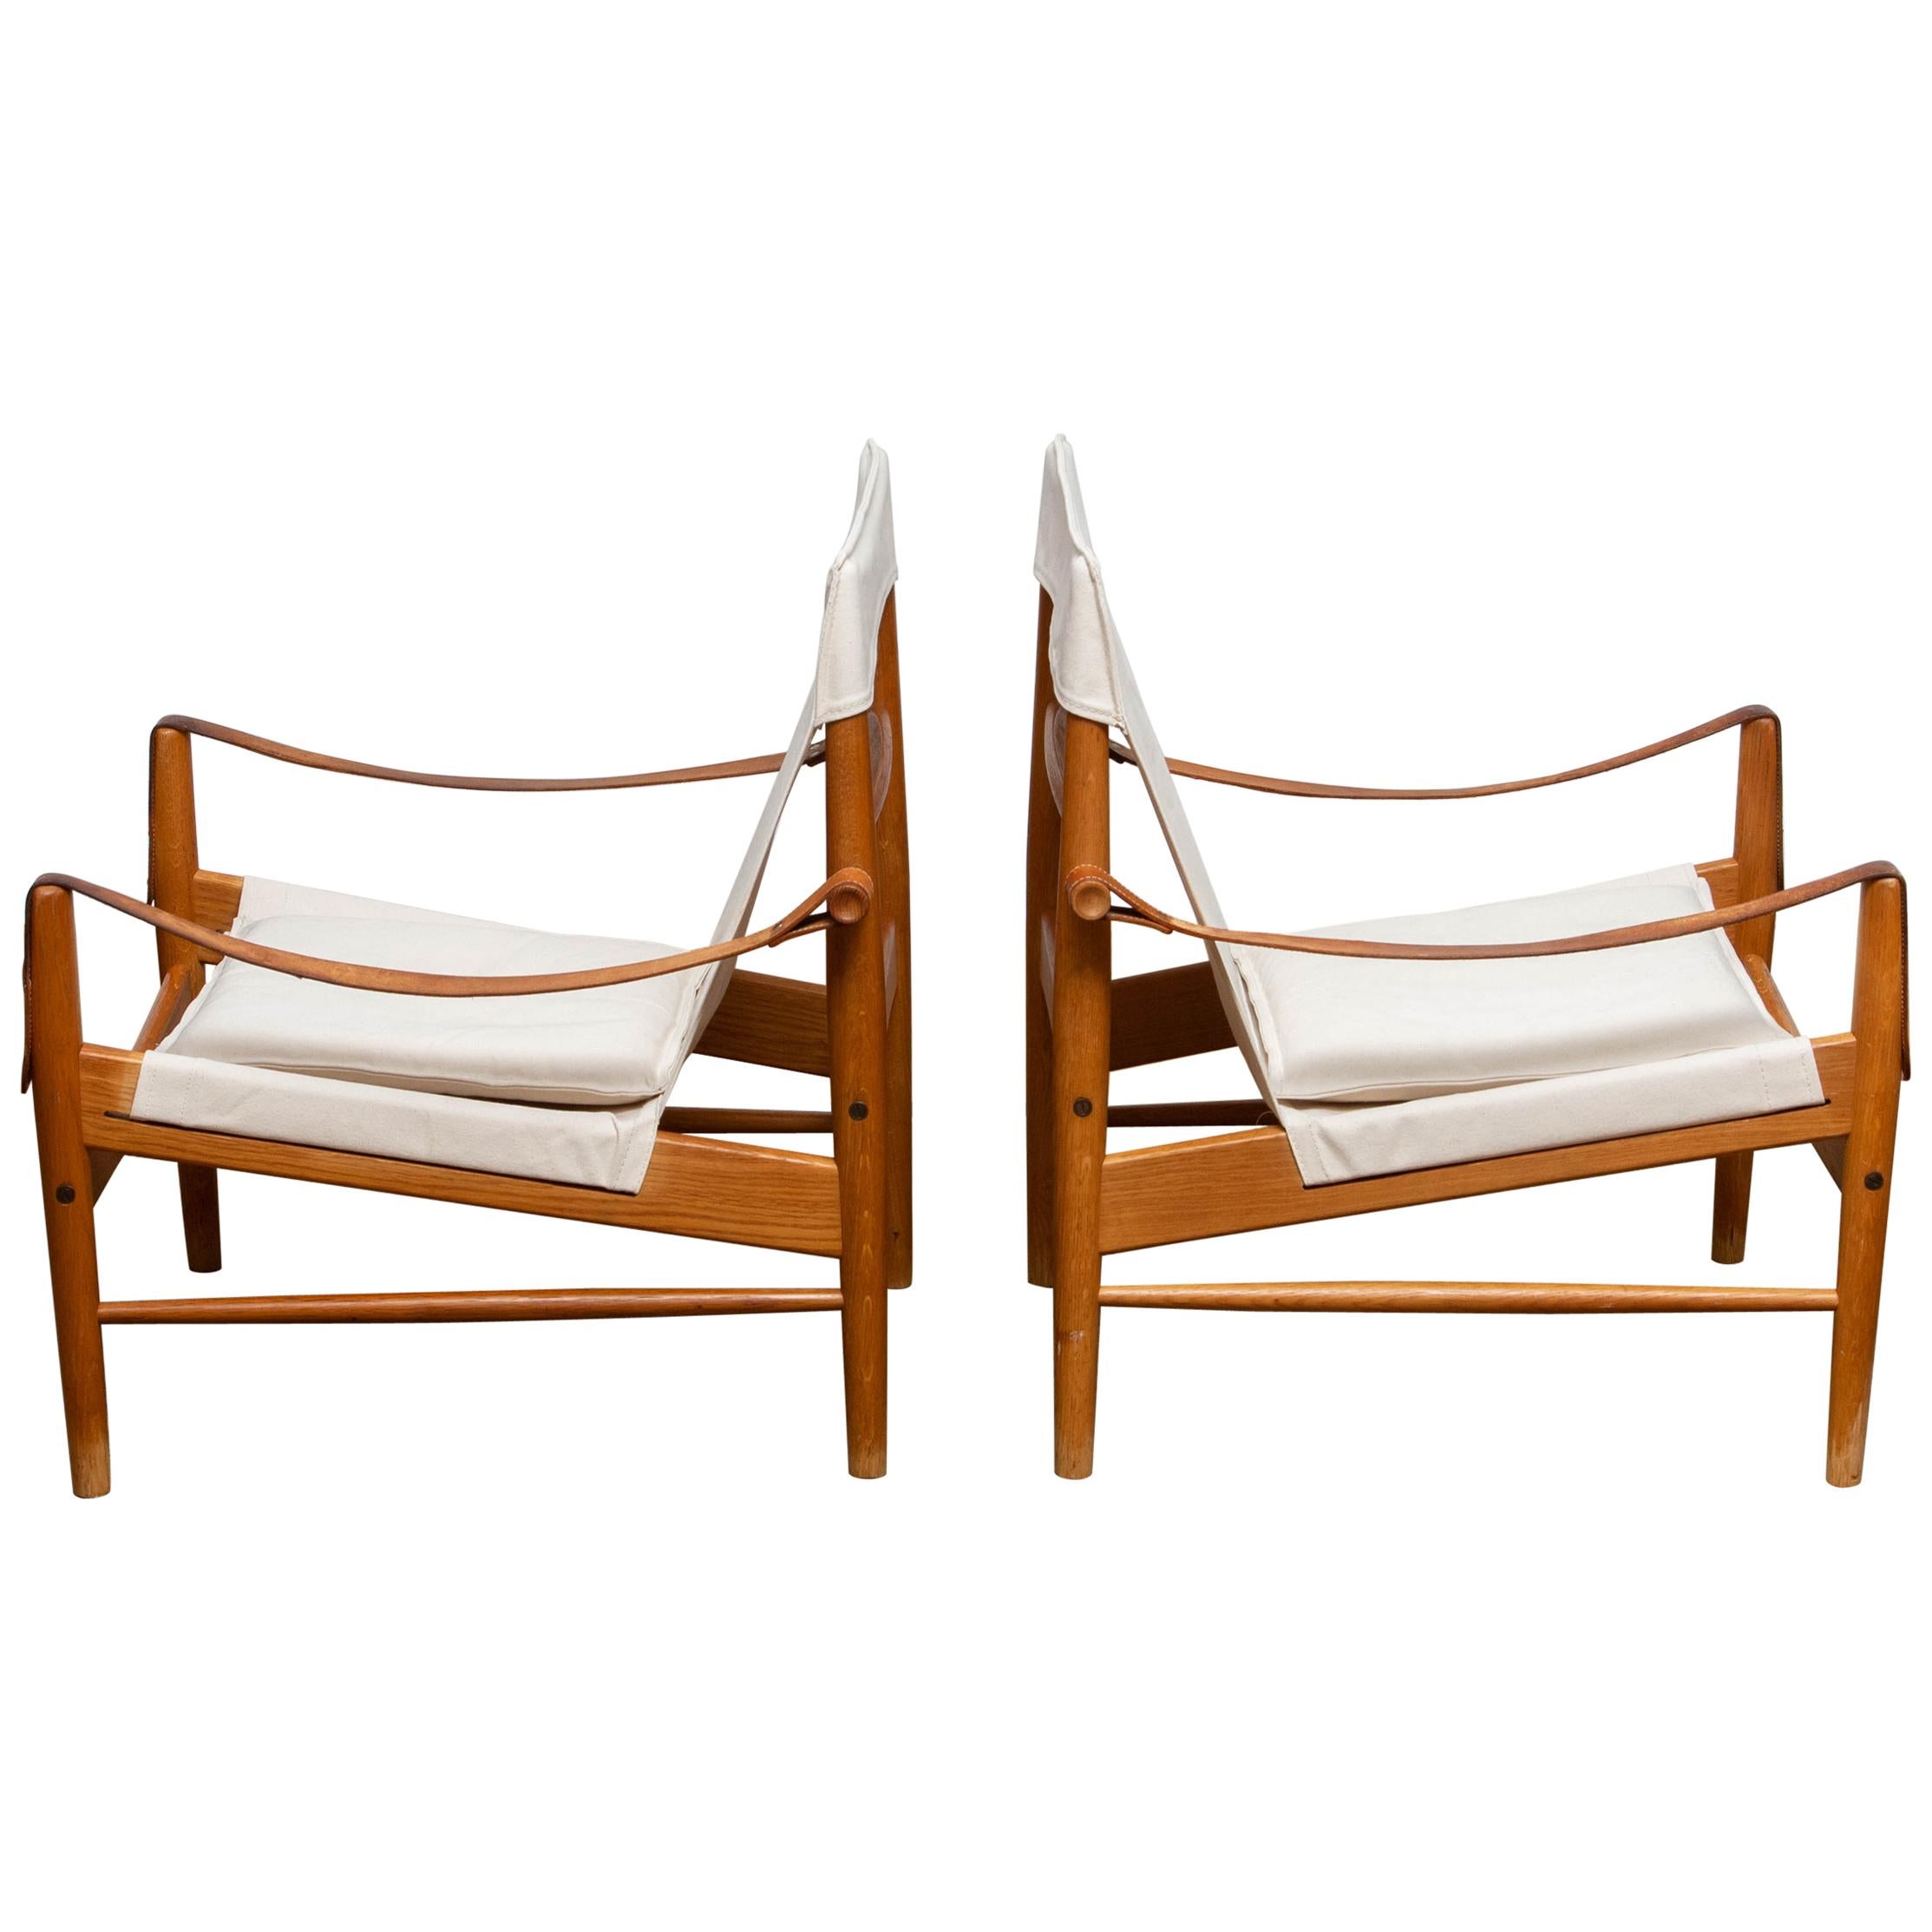 1960s, a Pair of Safari Chairs by Hans Olsen for Viska Möbler in Kinna, Sweden In Good Condition In Silvolde, Gelderland